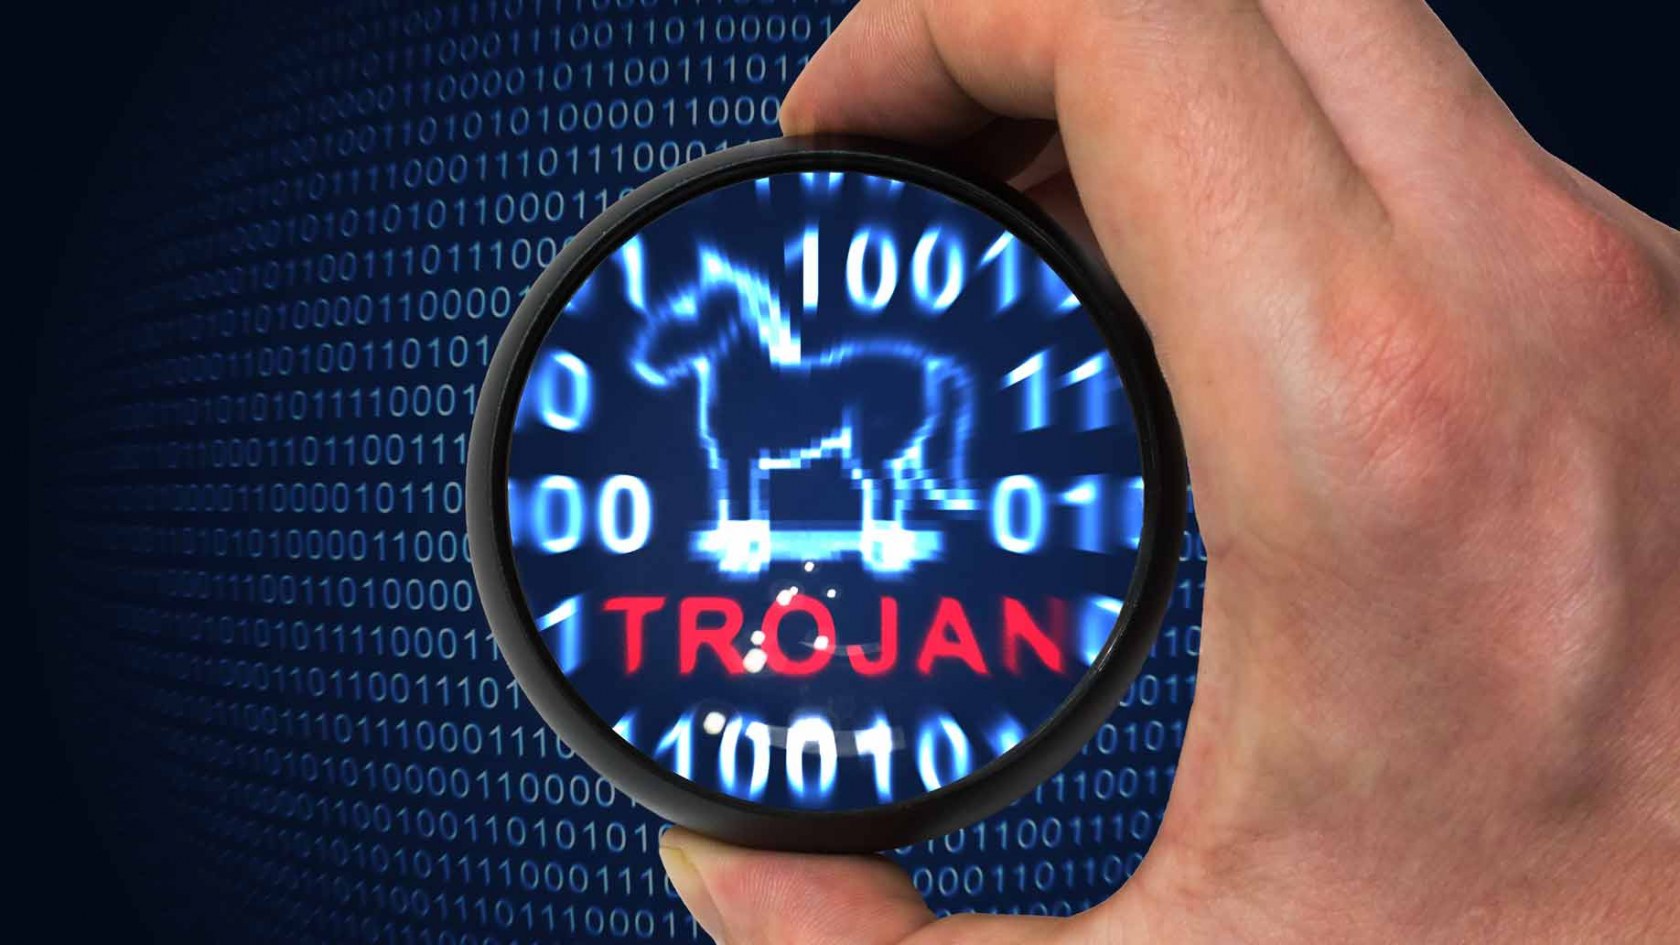 Report: Banking trojan attacks increased 16 percent YoY; Android attacks up three-fold